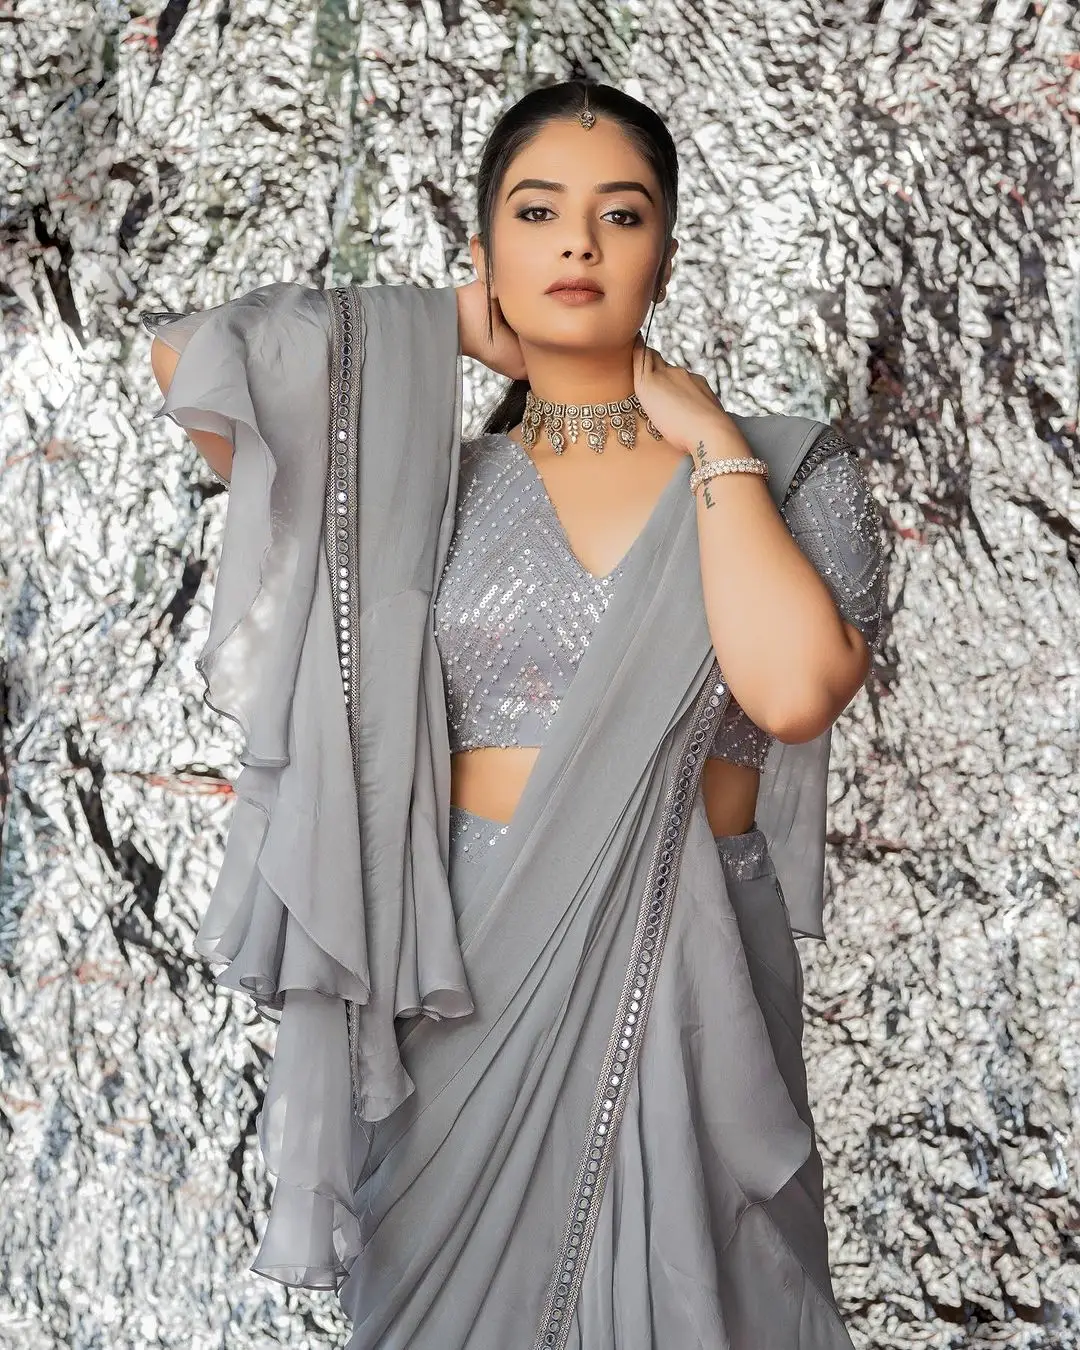 ETV Actress Sreemukhi in Traditional Blue Saree Blouse